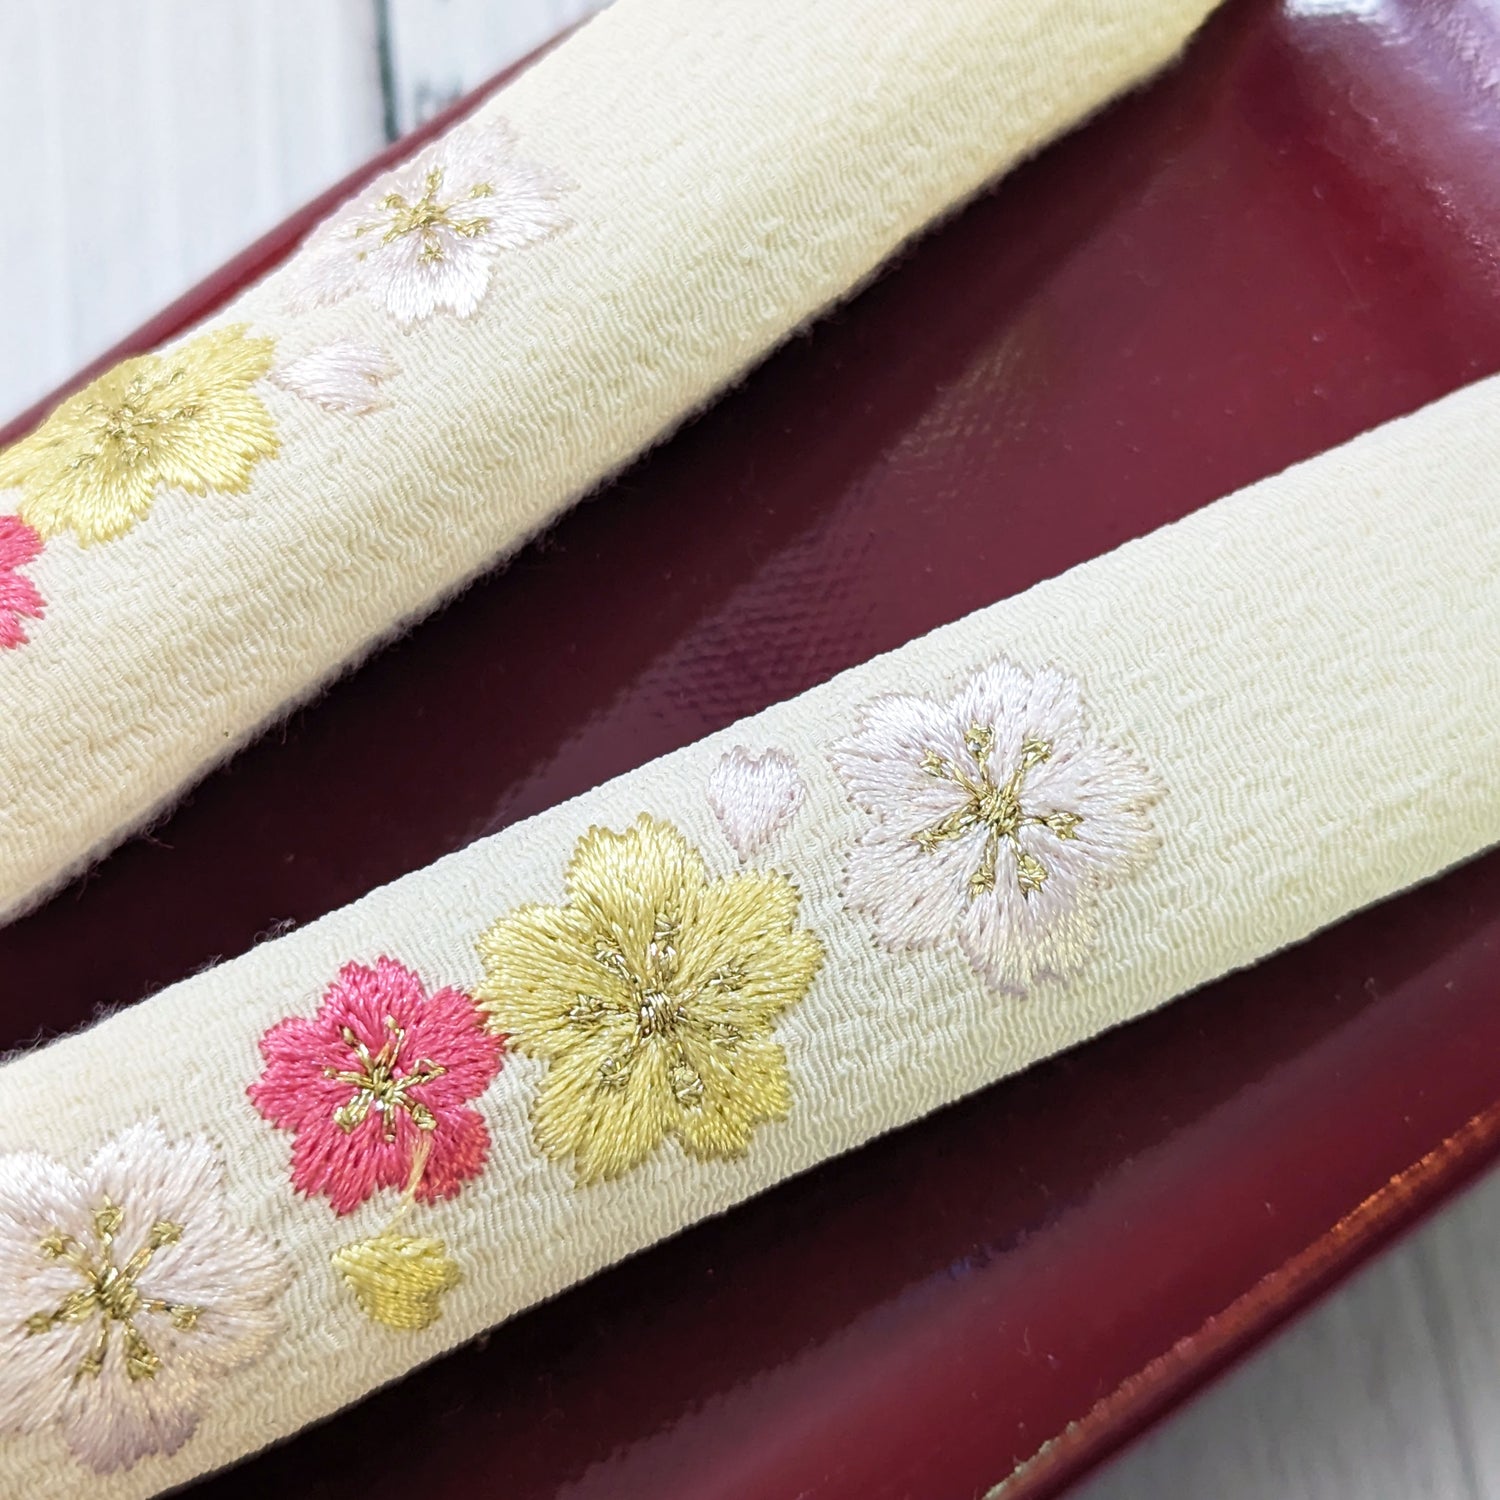 Japanese Traditional Zori Sandals - Cherry Blossoms Embroidery MaroonJapanese Traditional Zori Sandals - Cherry Blossoms Embroidery Maroon